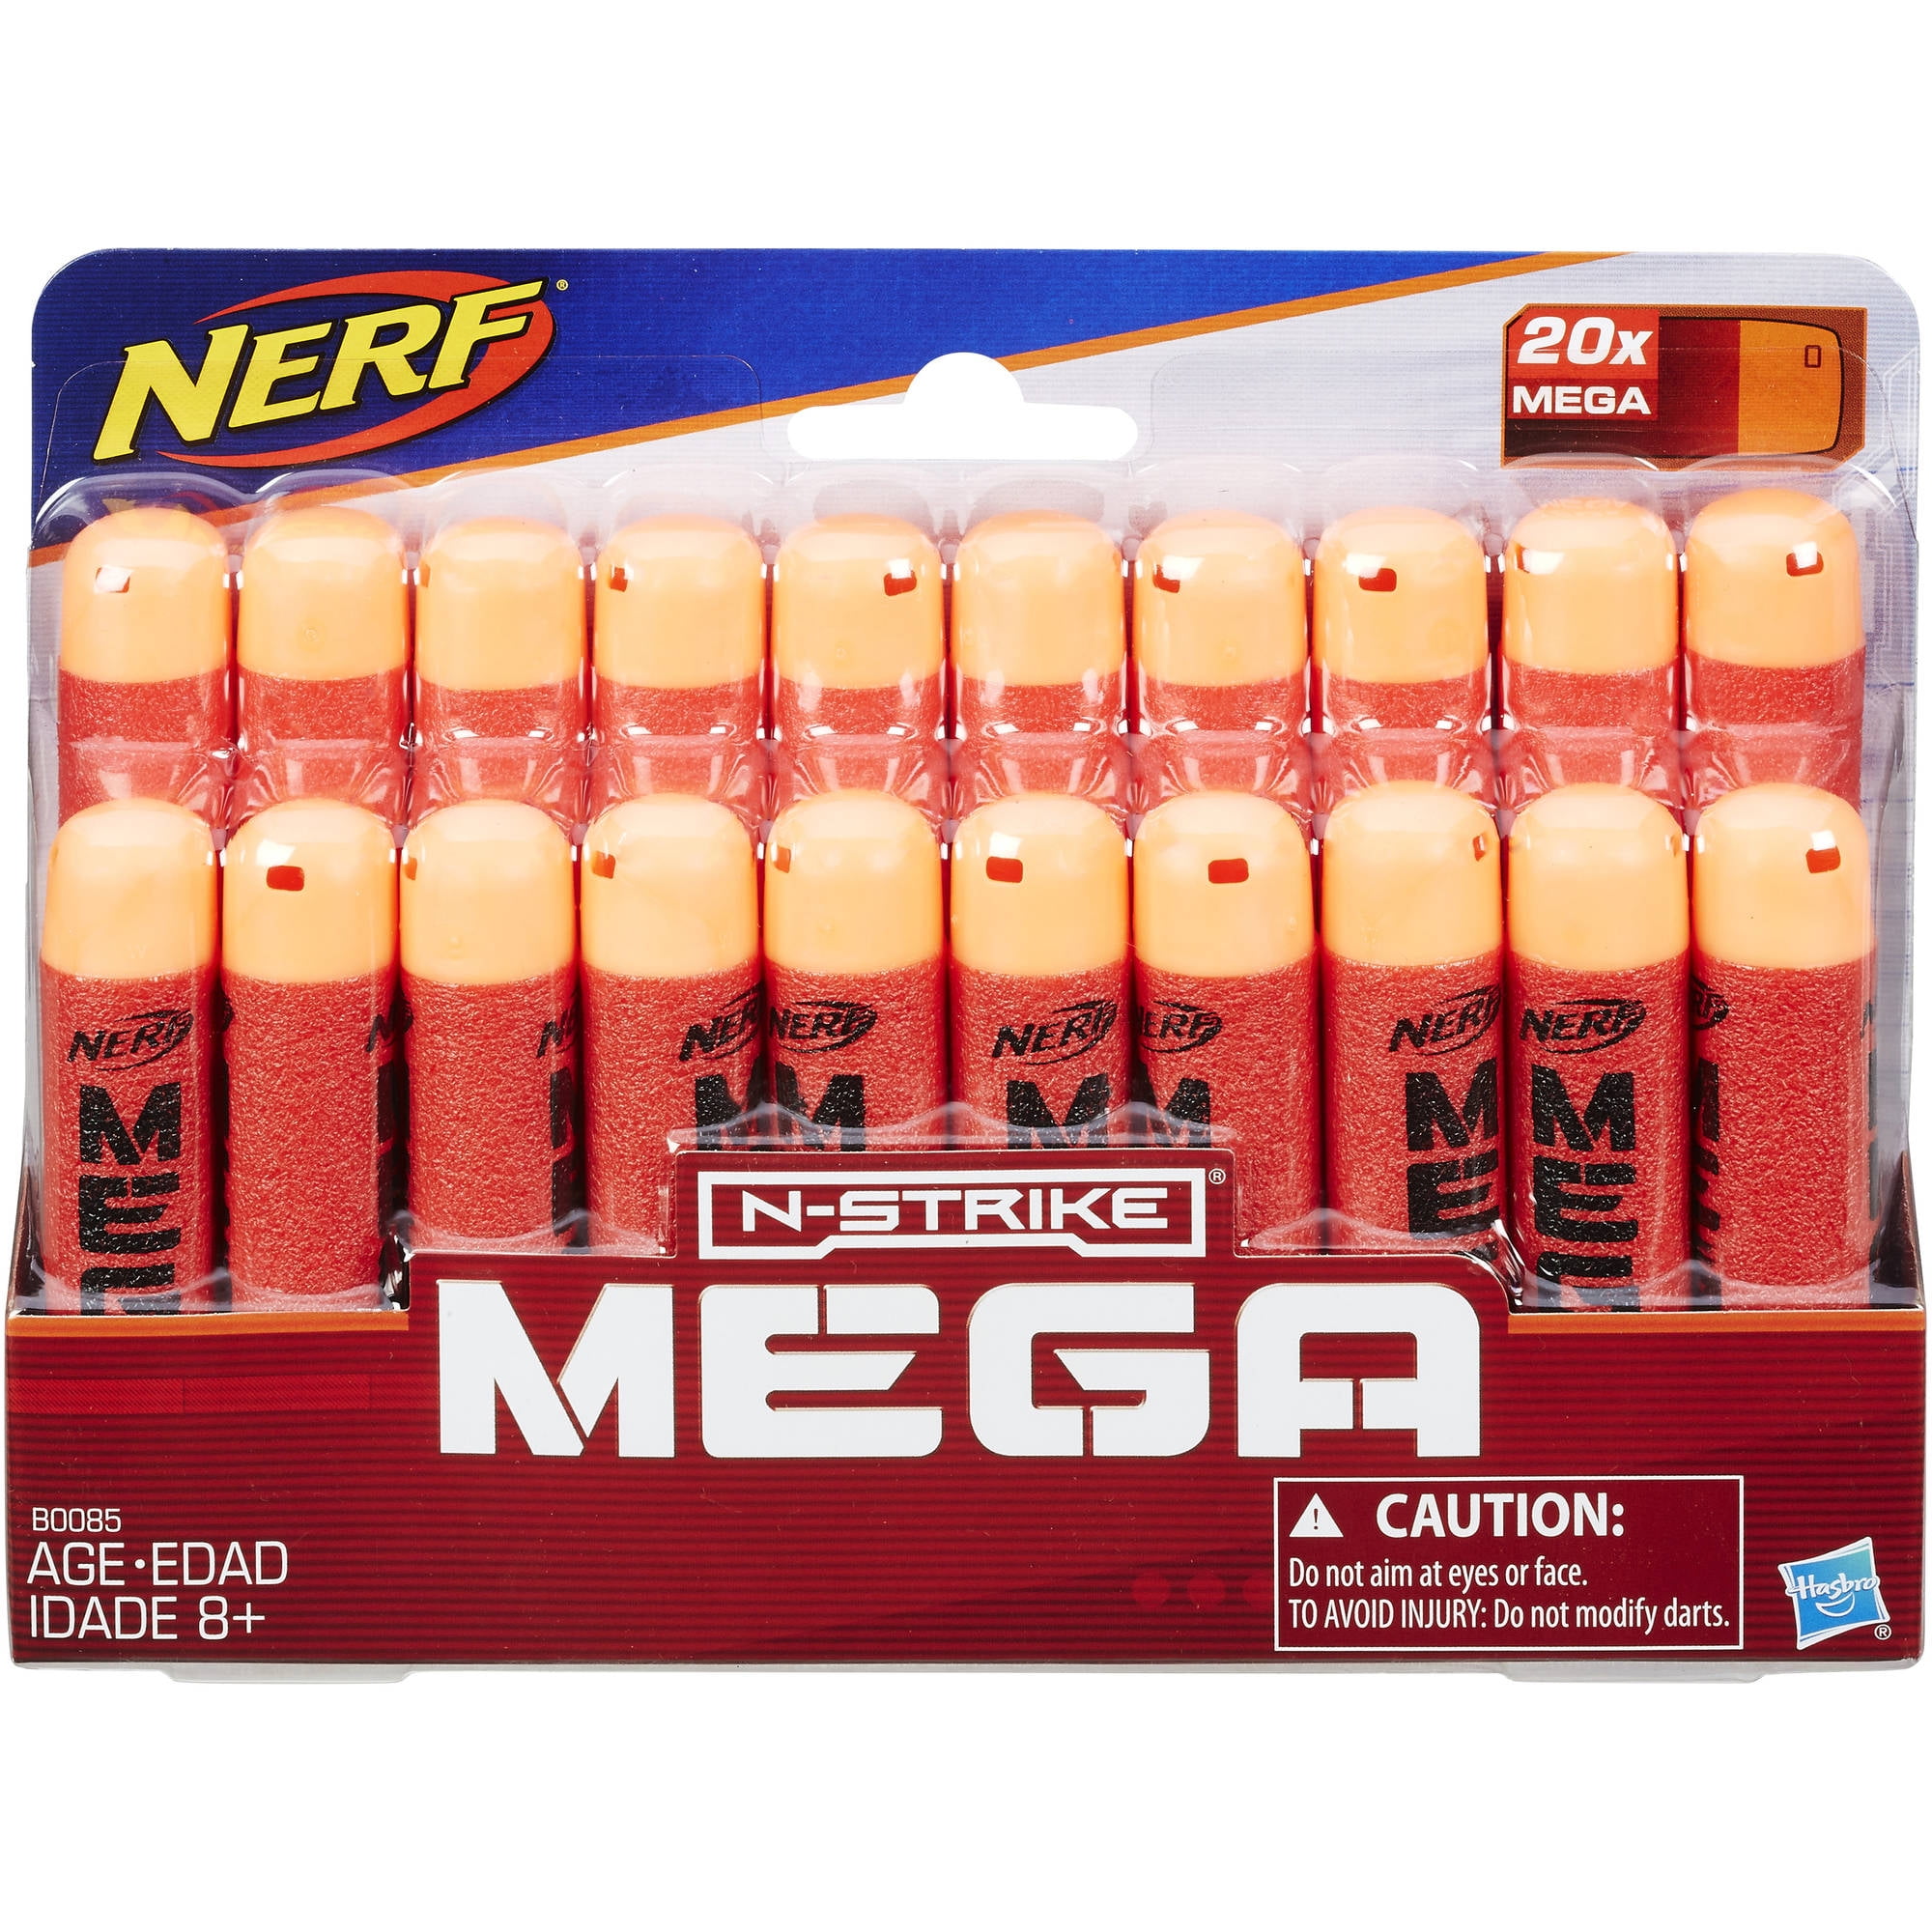 Nerf Official Elite MEGA Whistler Darts 20Pack Refill = 40 Darts 2 LOT of Two 